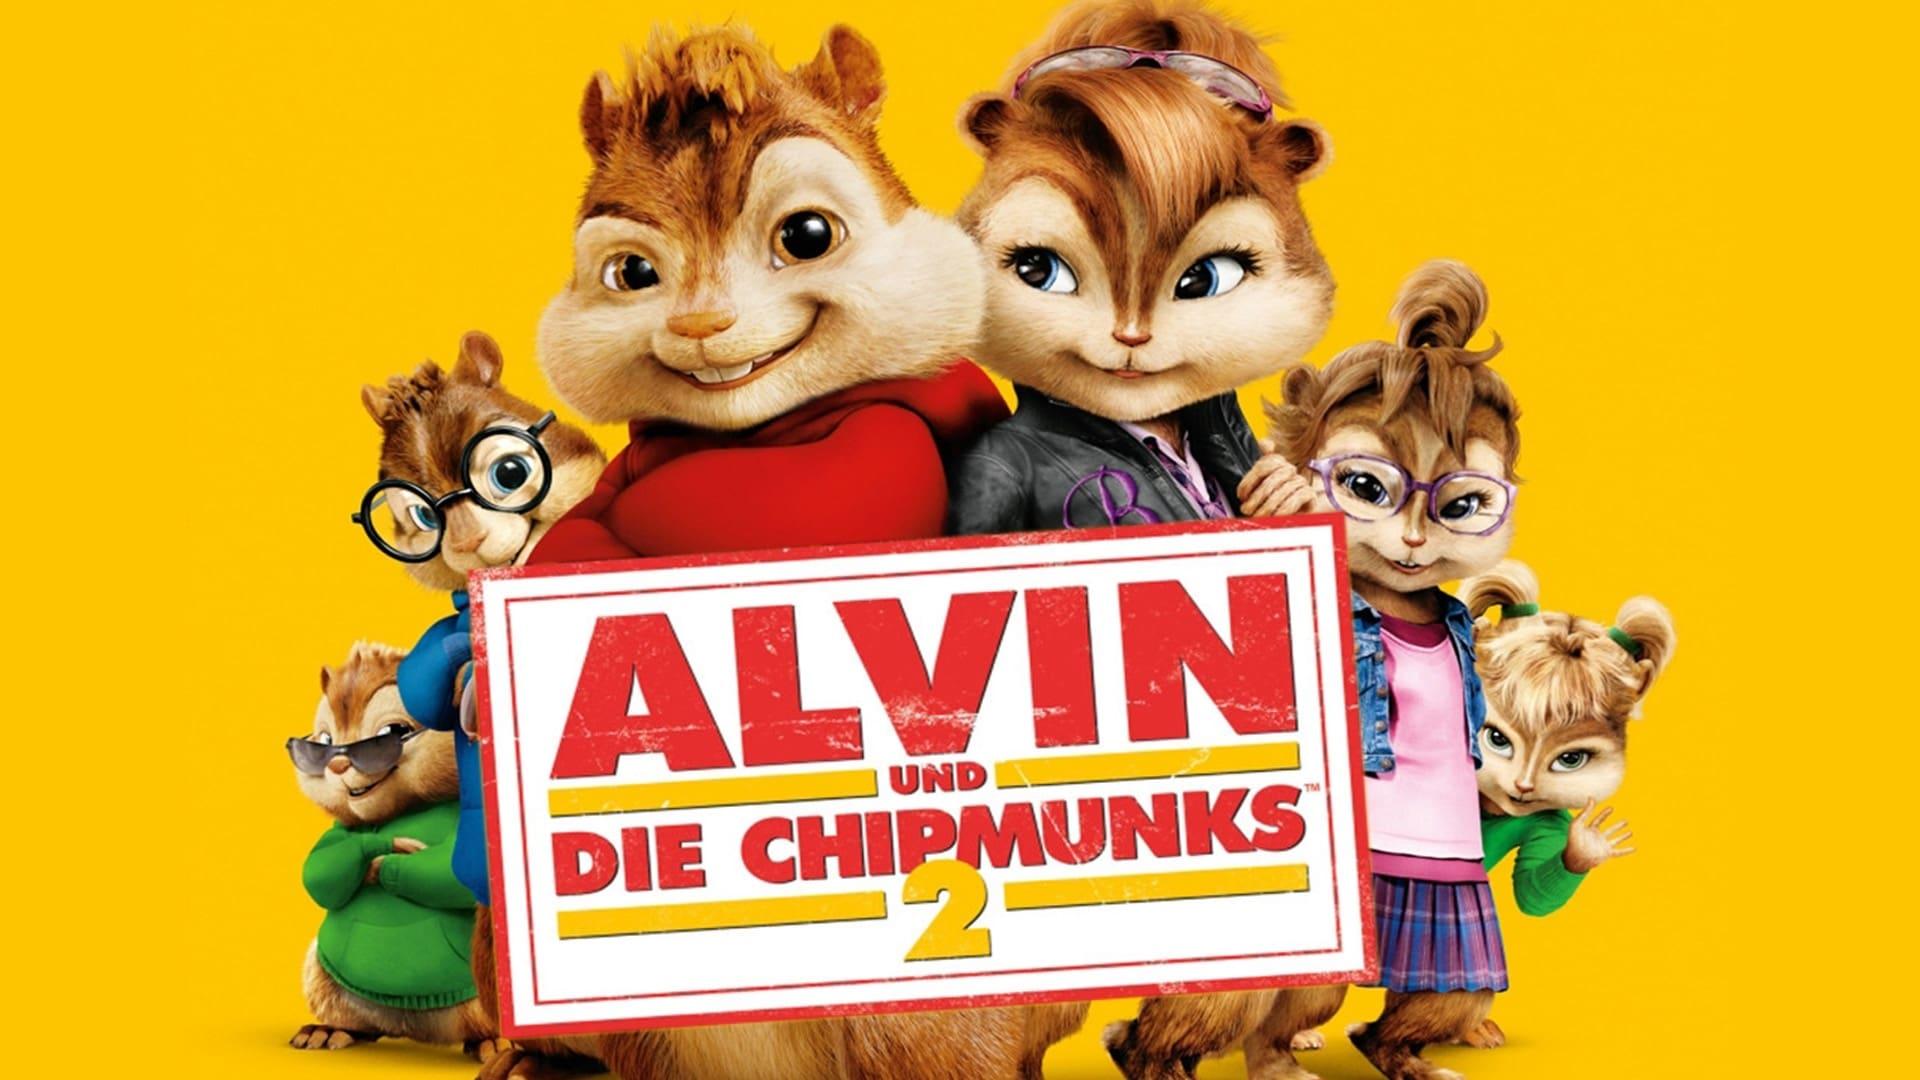 Uptwon Funk The Chipmunks Lyrics - YouTube